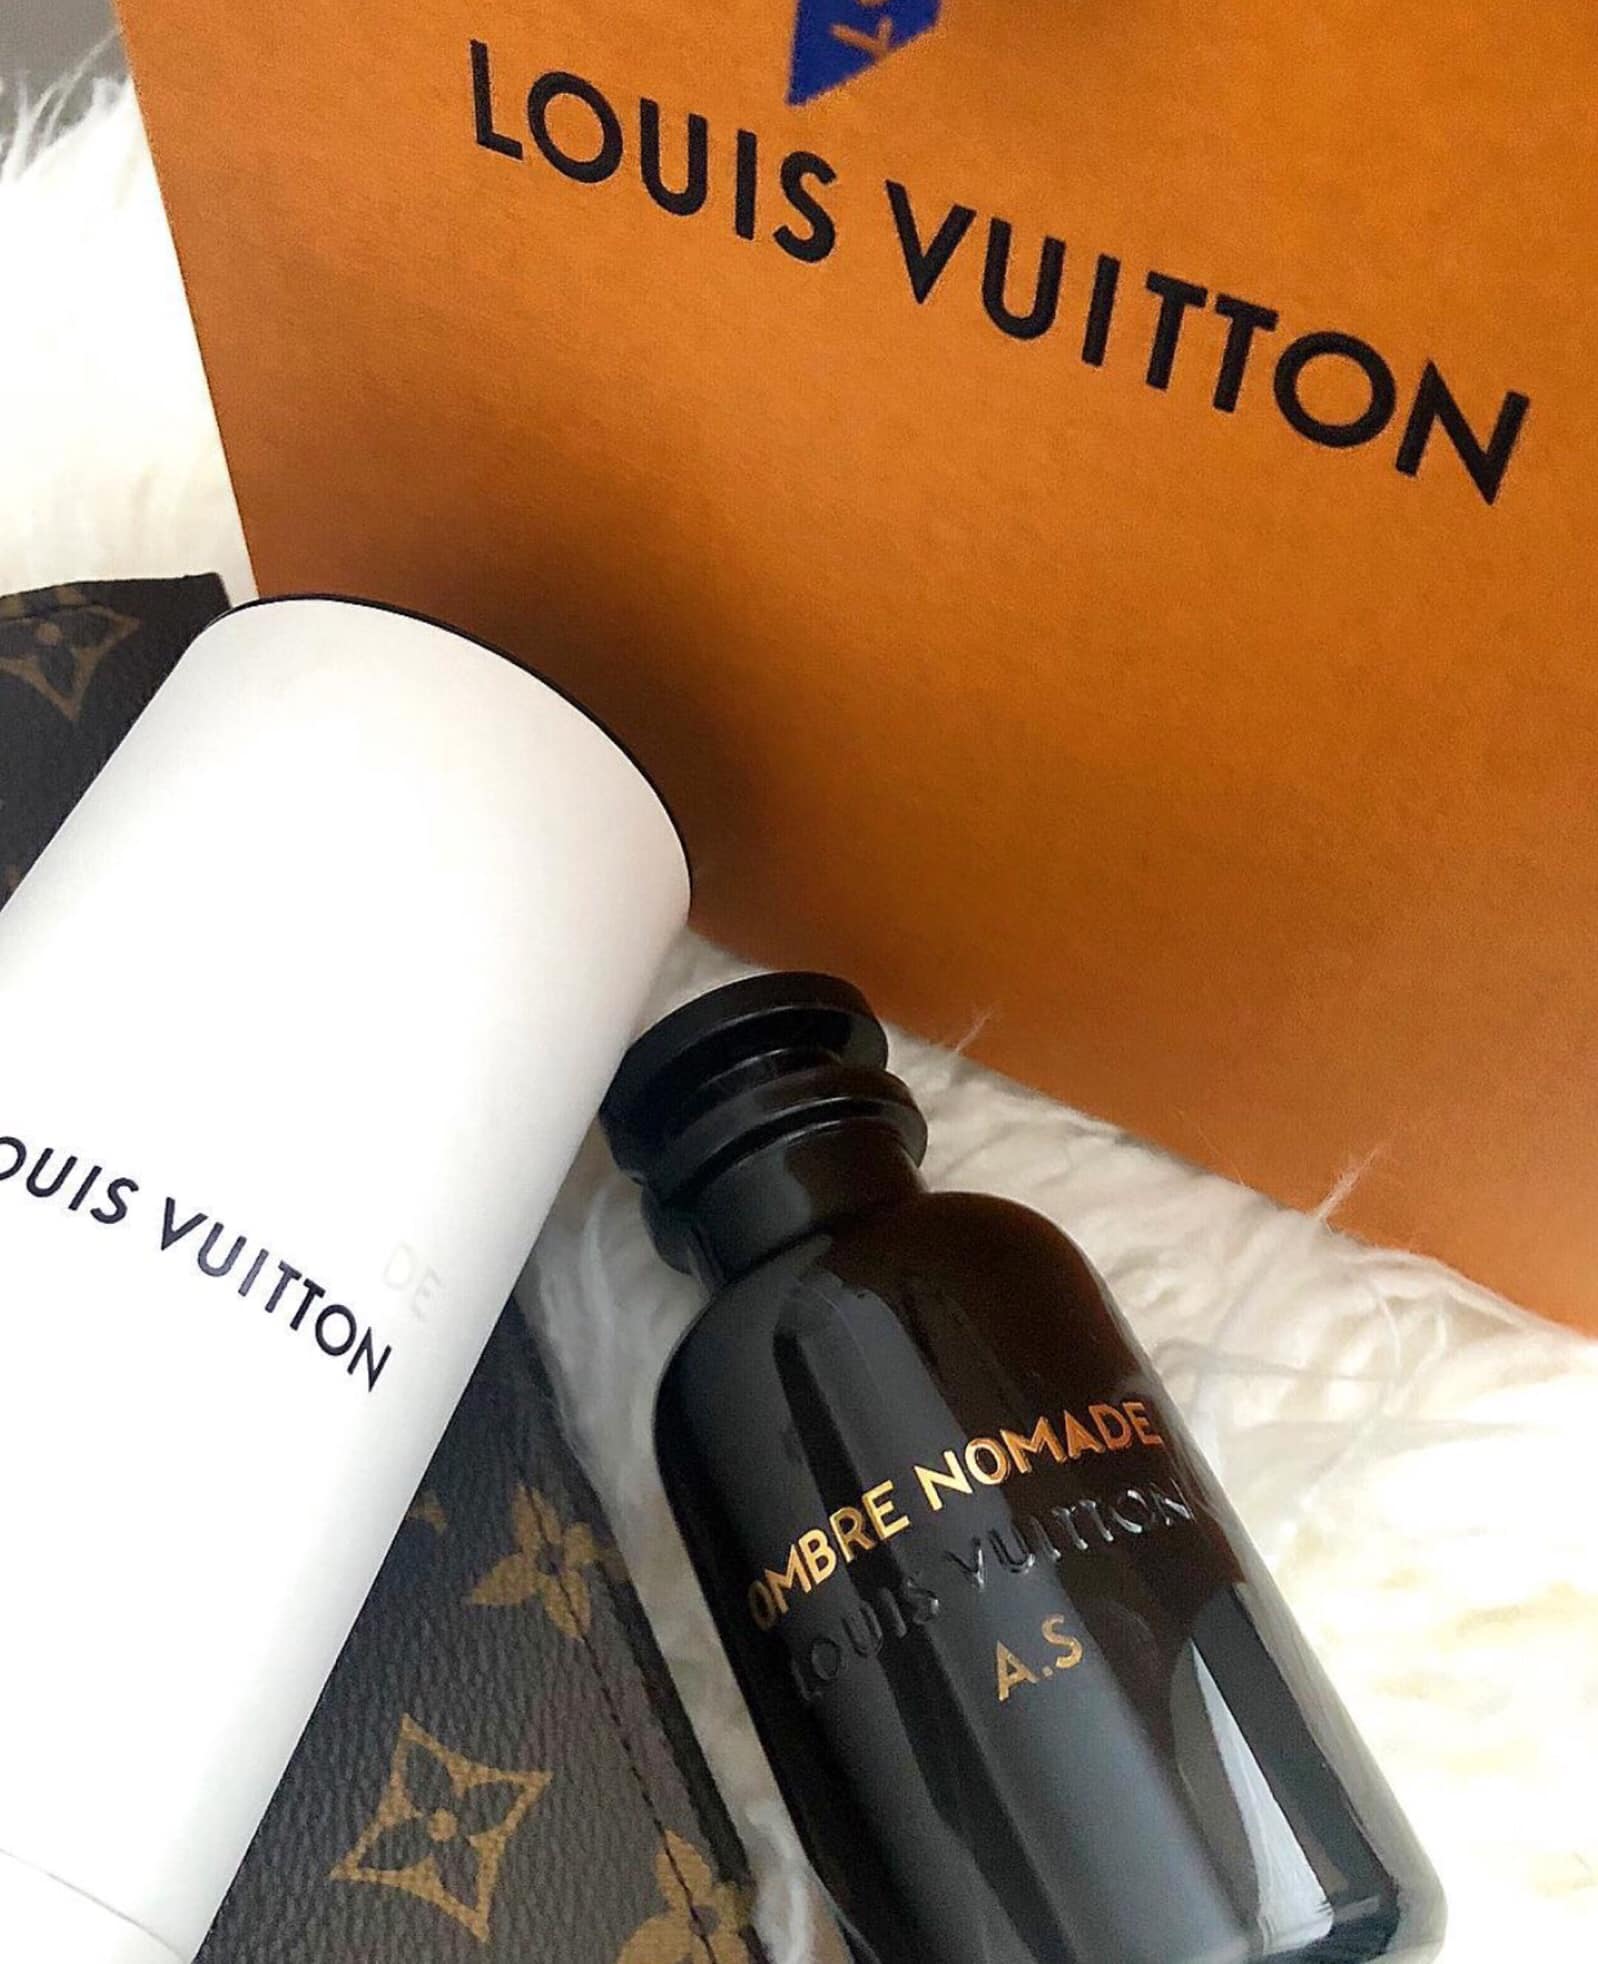 Nước Hoa Louis Vuitton Ombre Nomade Chính Hãng Giá Tốt